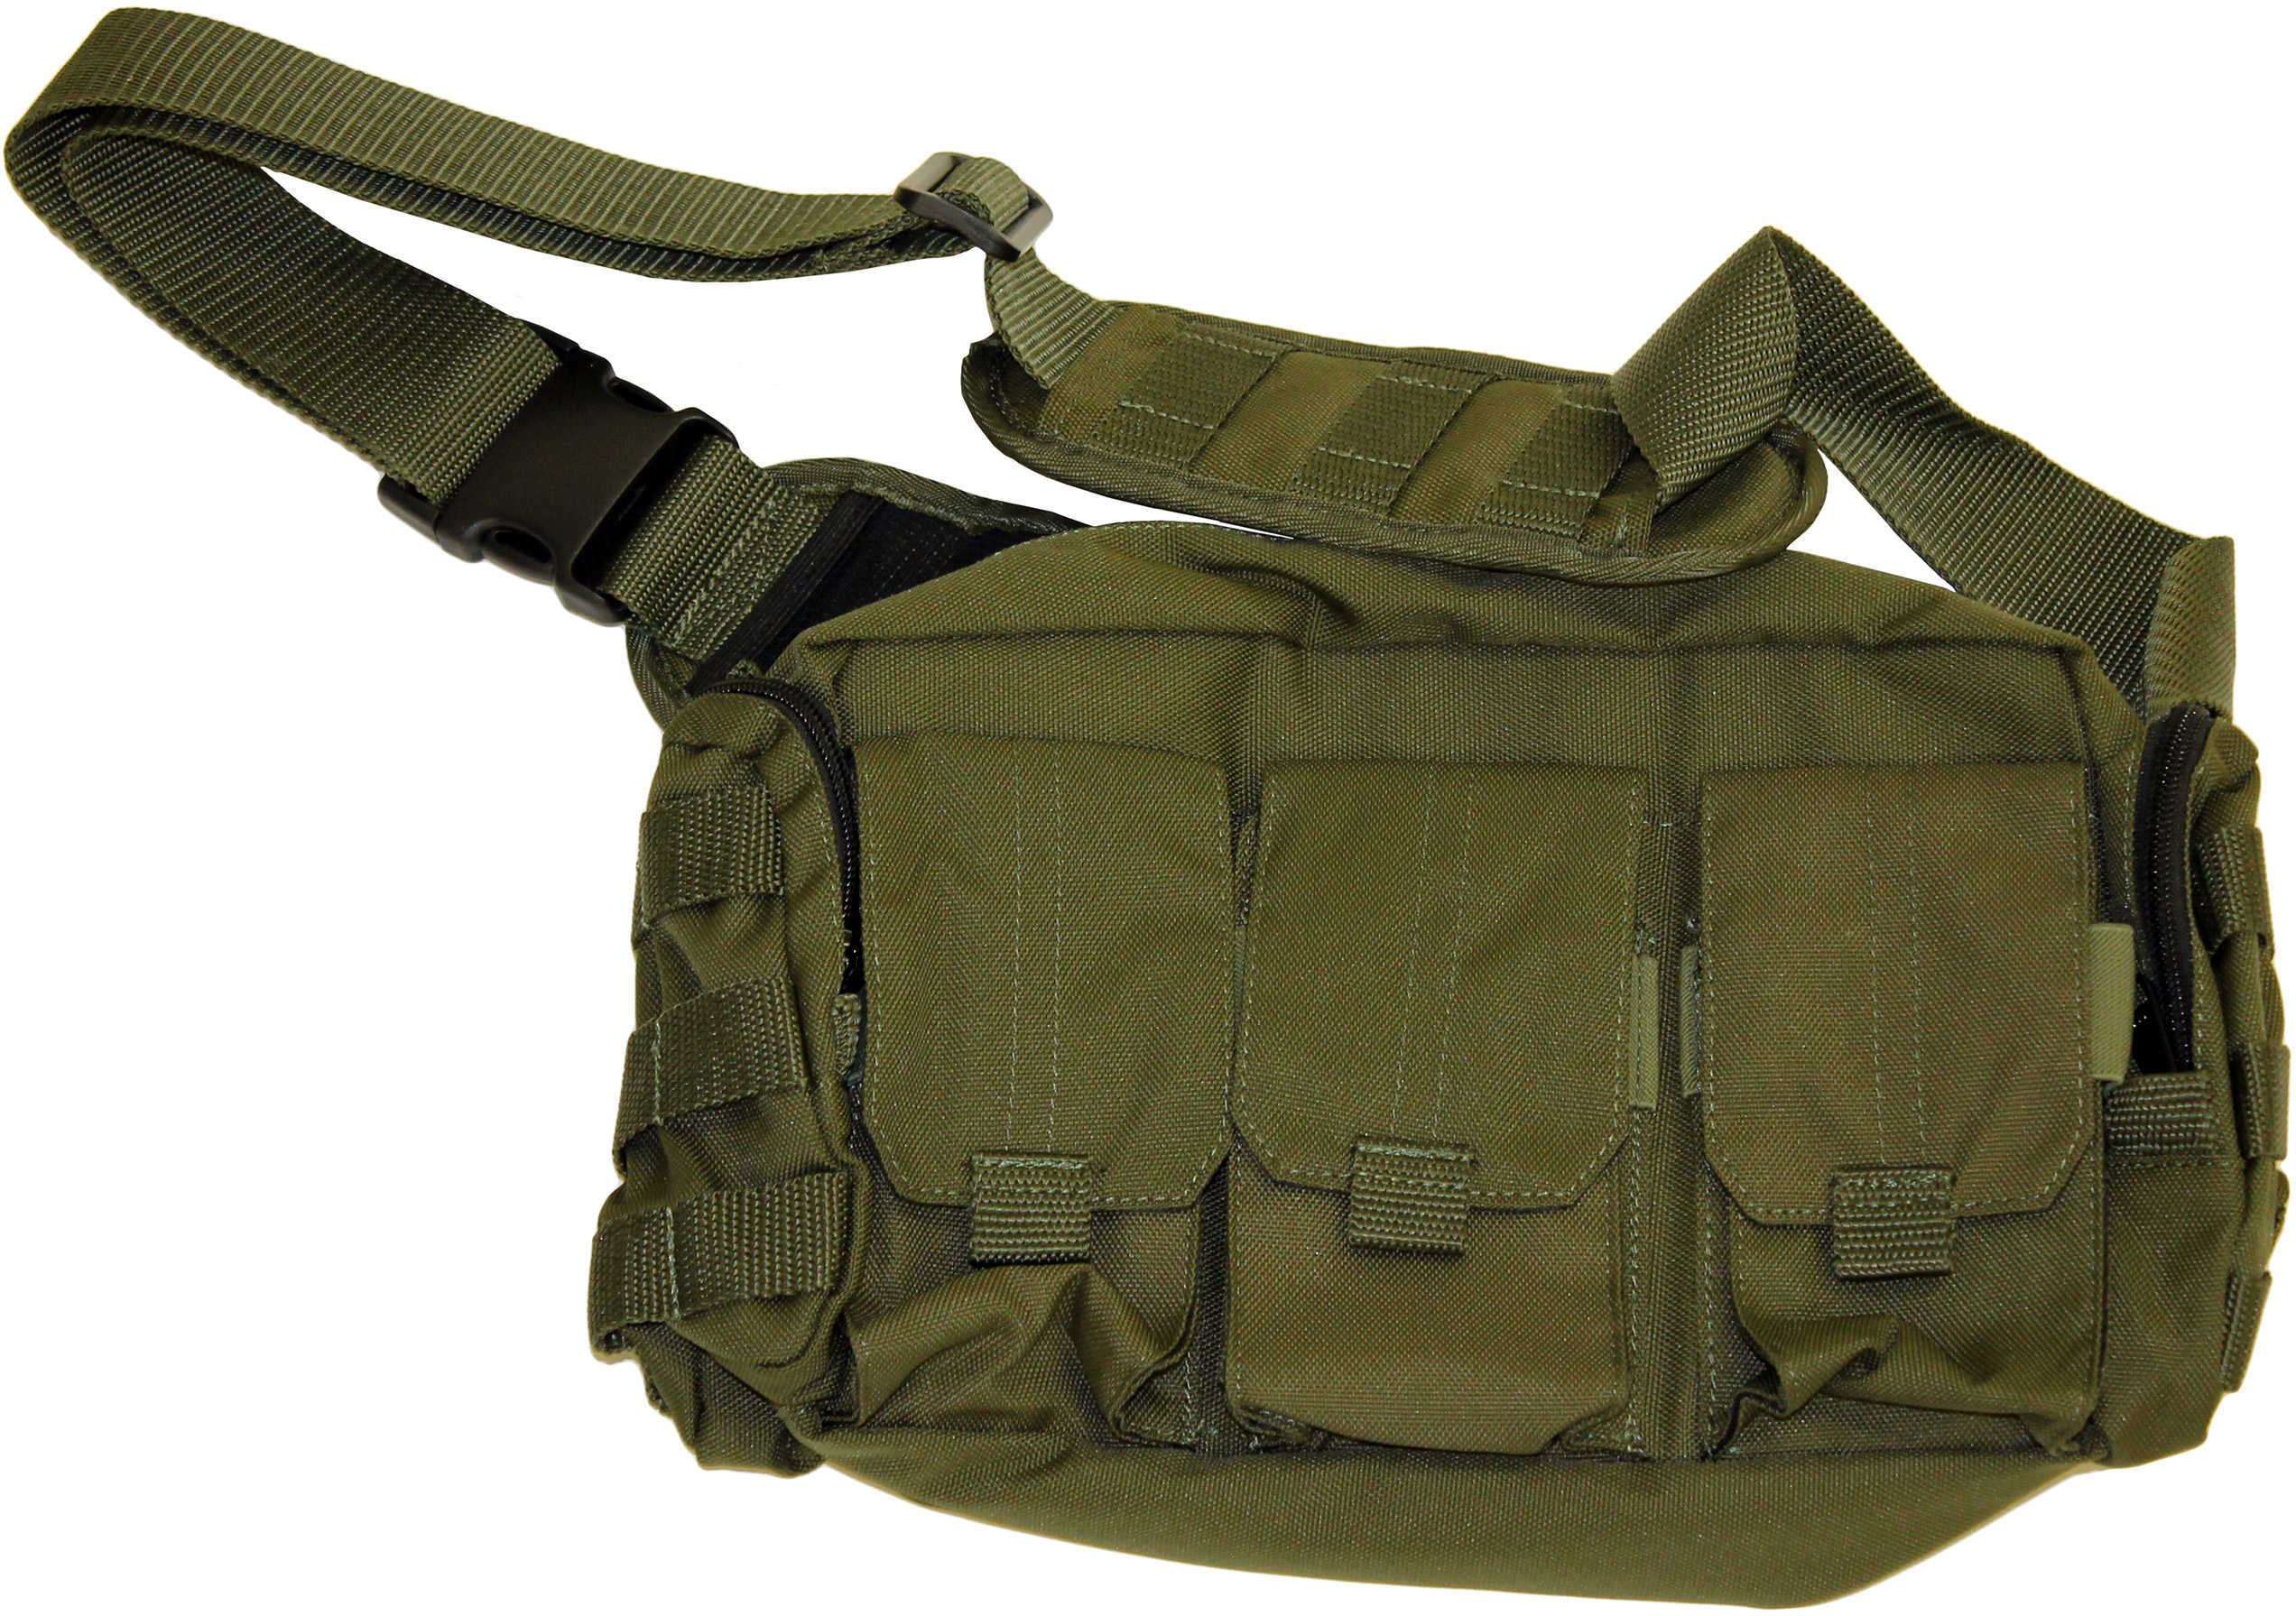 Galati Gear Tactical Response Bailout Bag Olive Drab Md: GLTRBO-OD